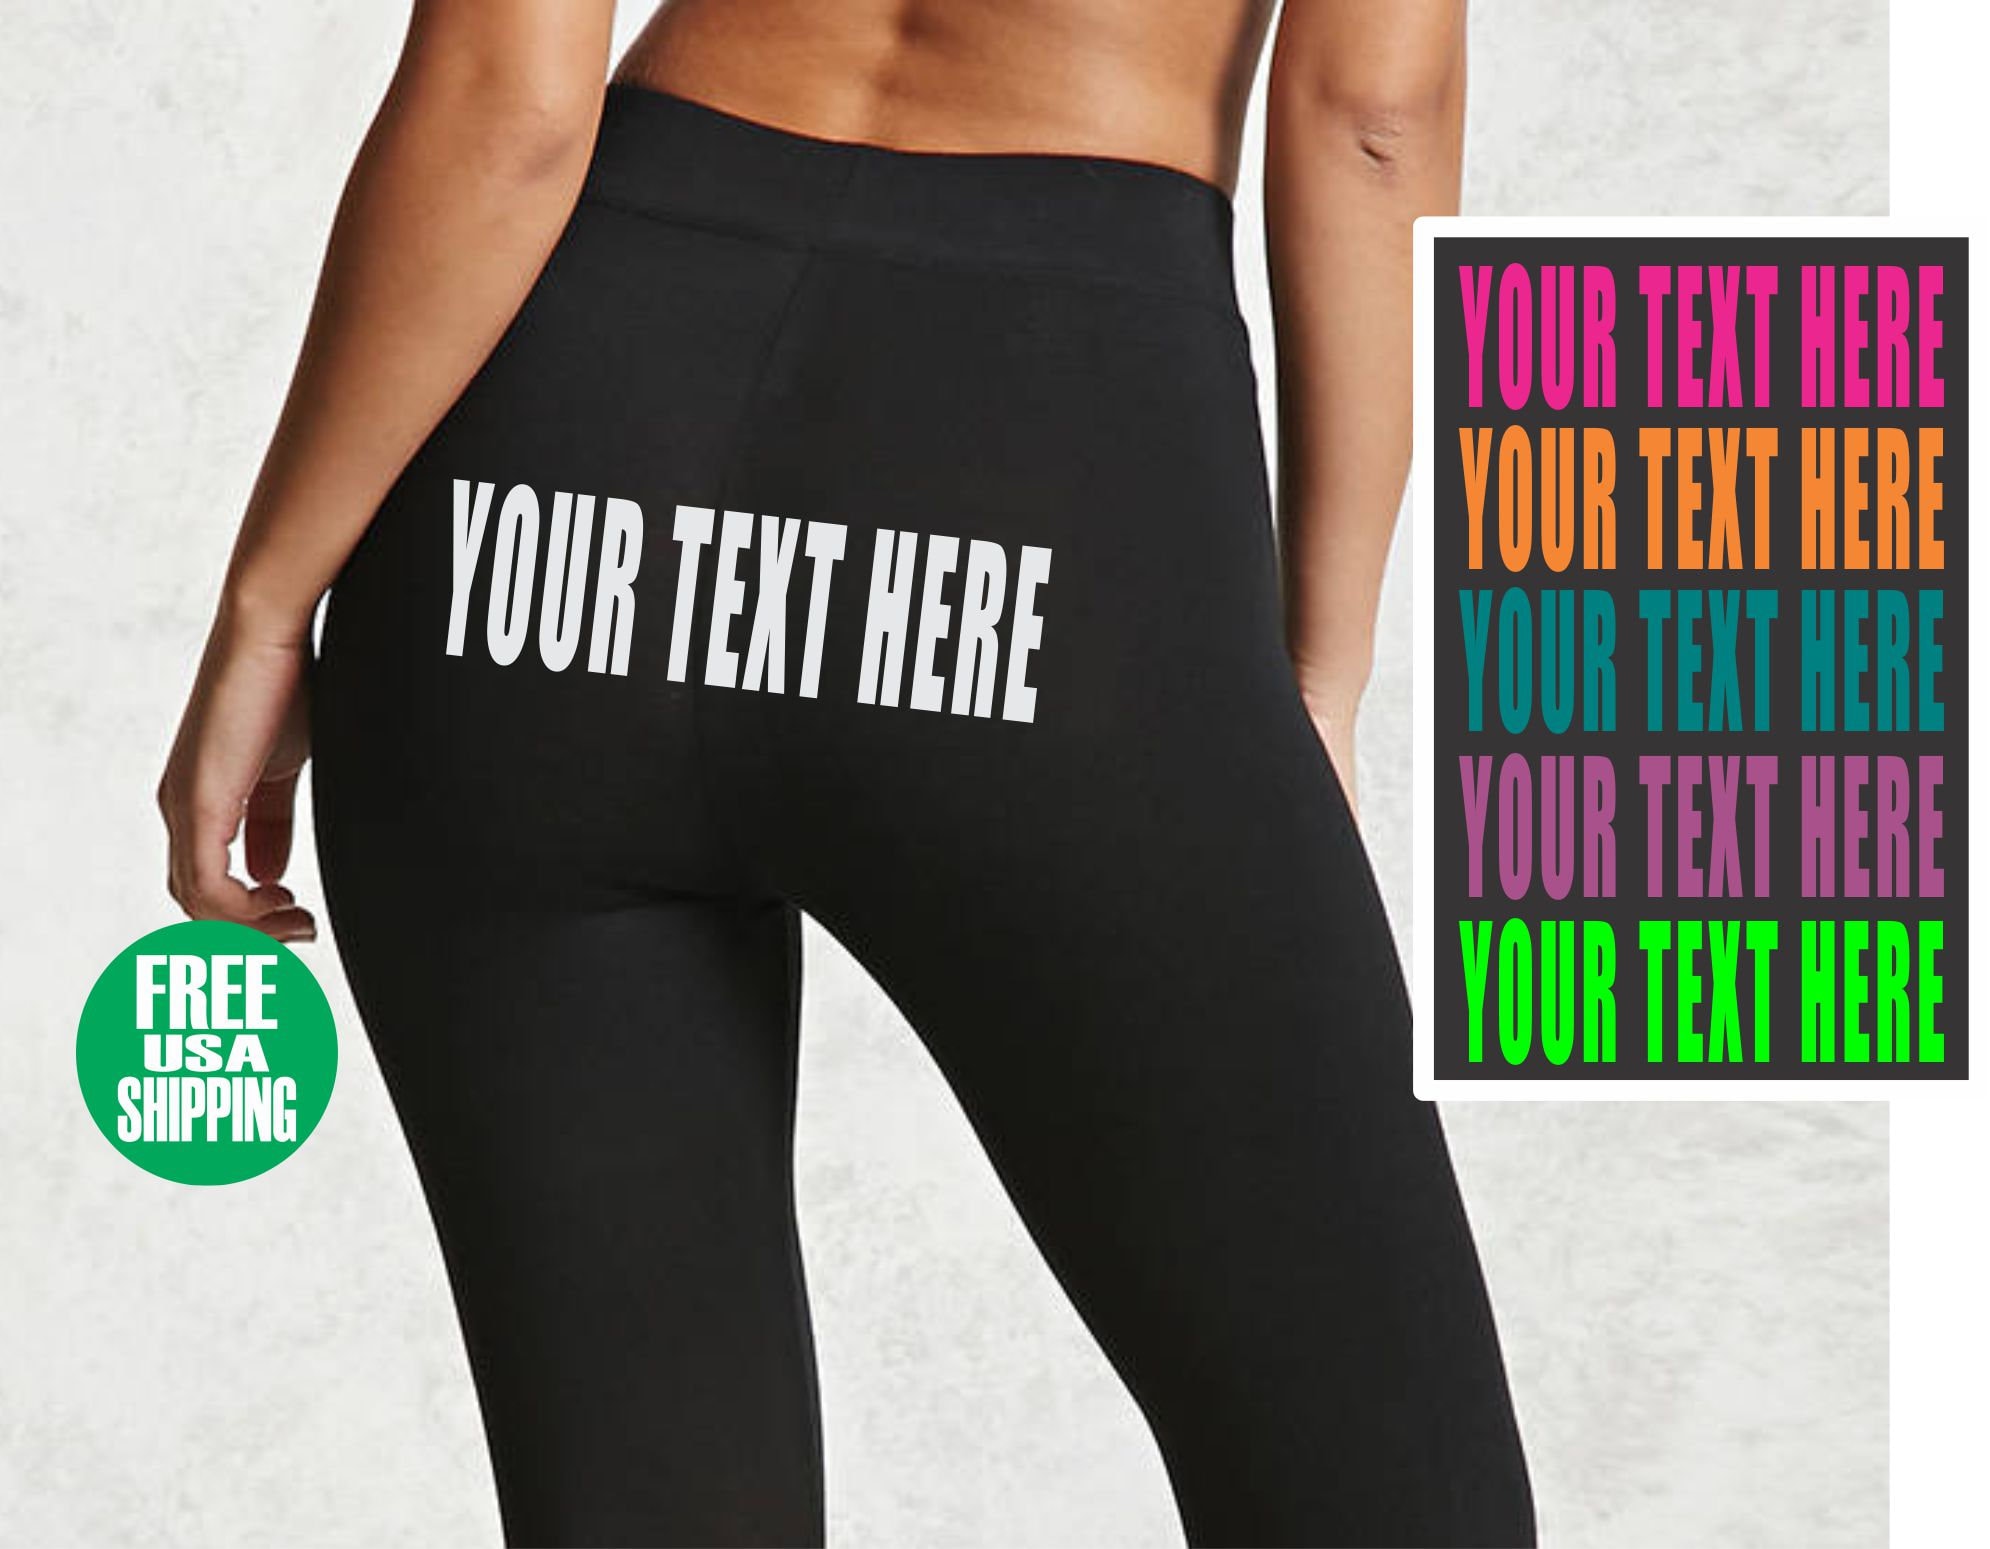 CUSTOM LEGGINGS Black Pants Workout Yoga Gym Your Text Here